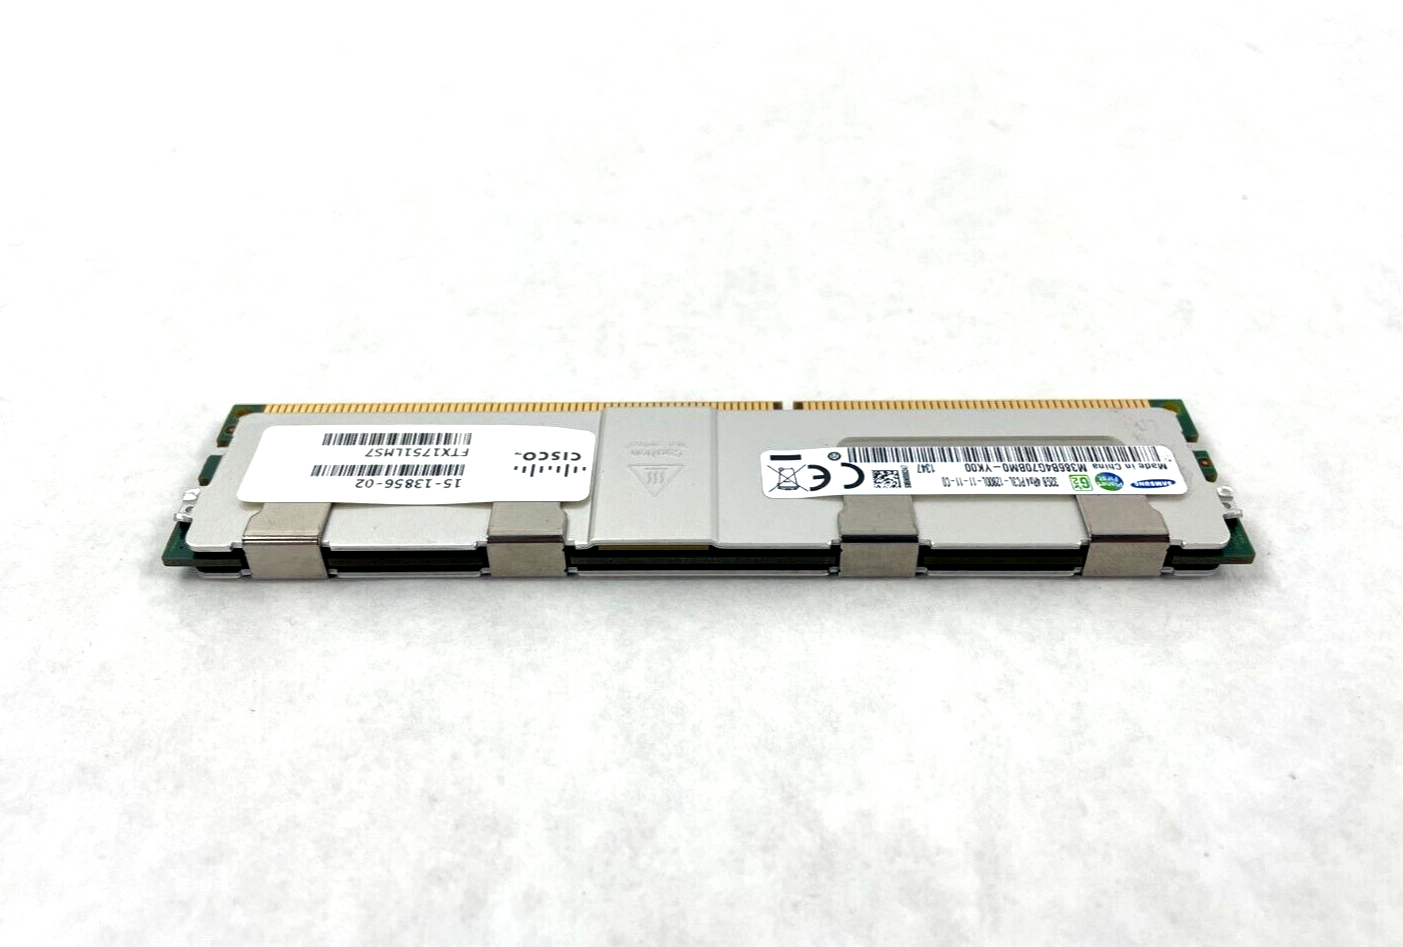 Samsung M386B4G70BM0-YK00 32GB Server RAM Memory, DDR3L, Cisco 15-13856-02